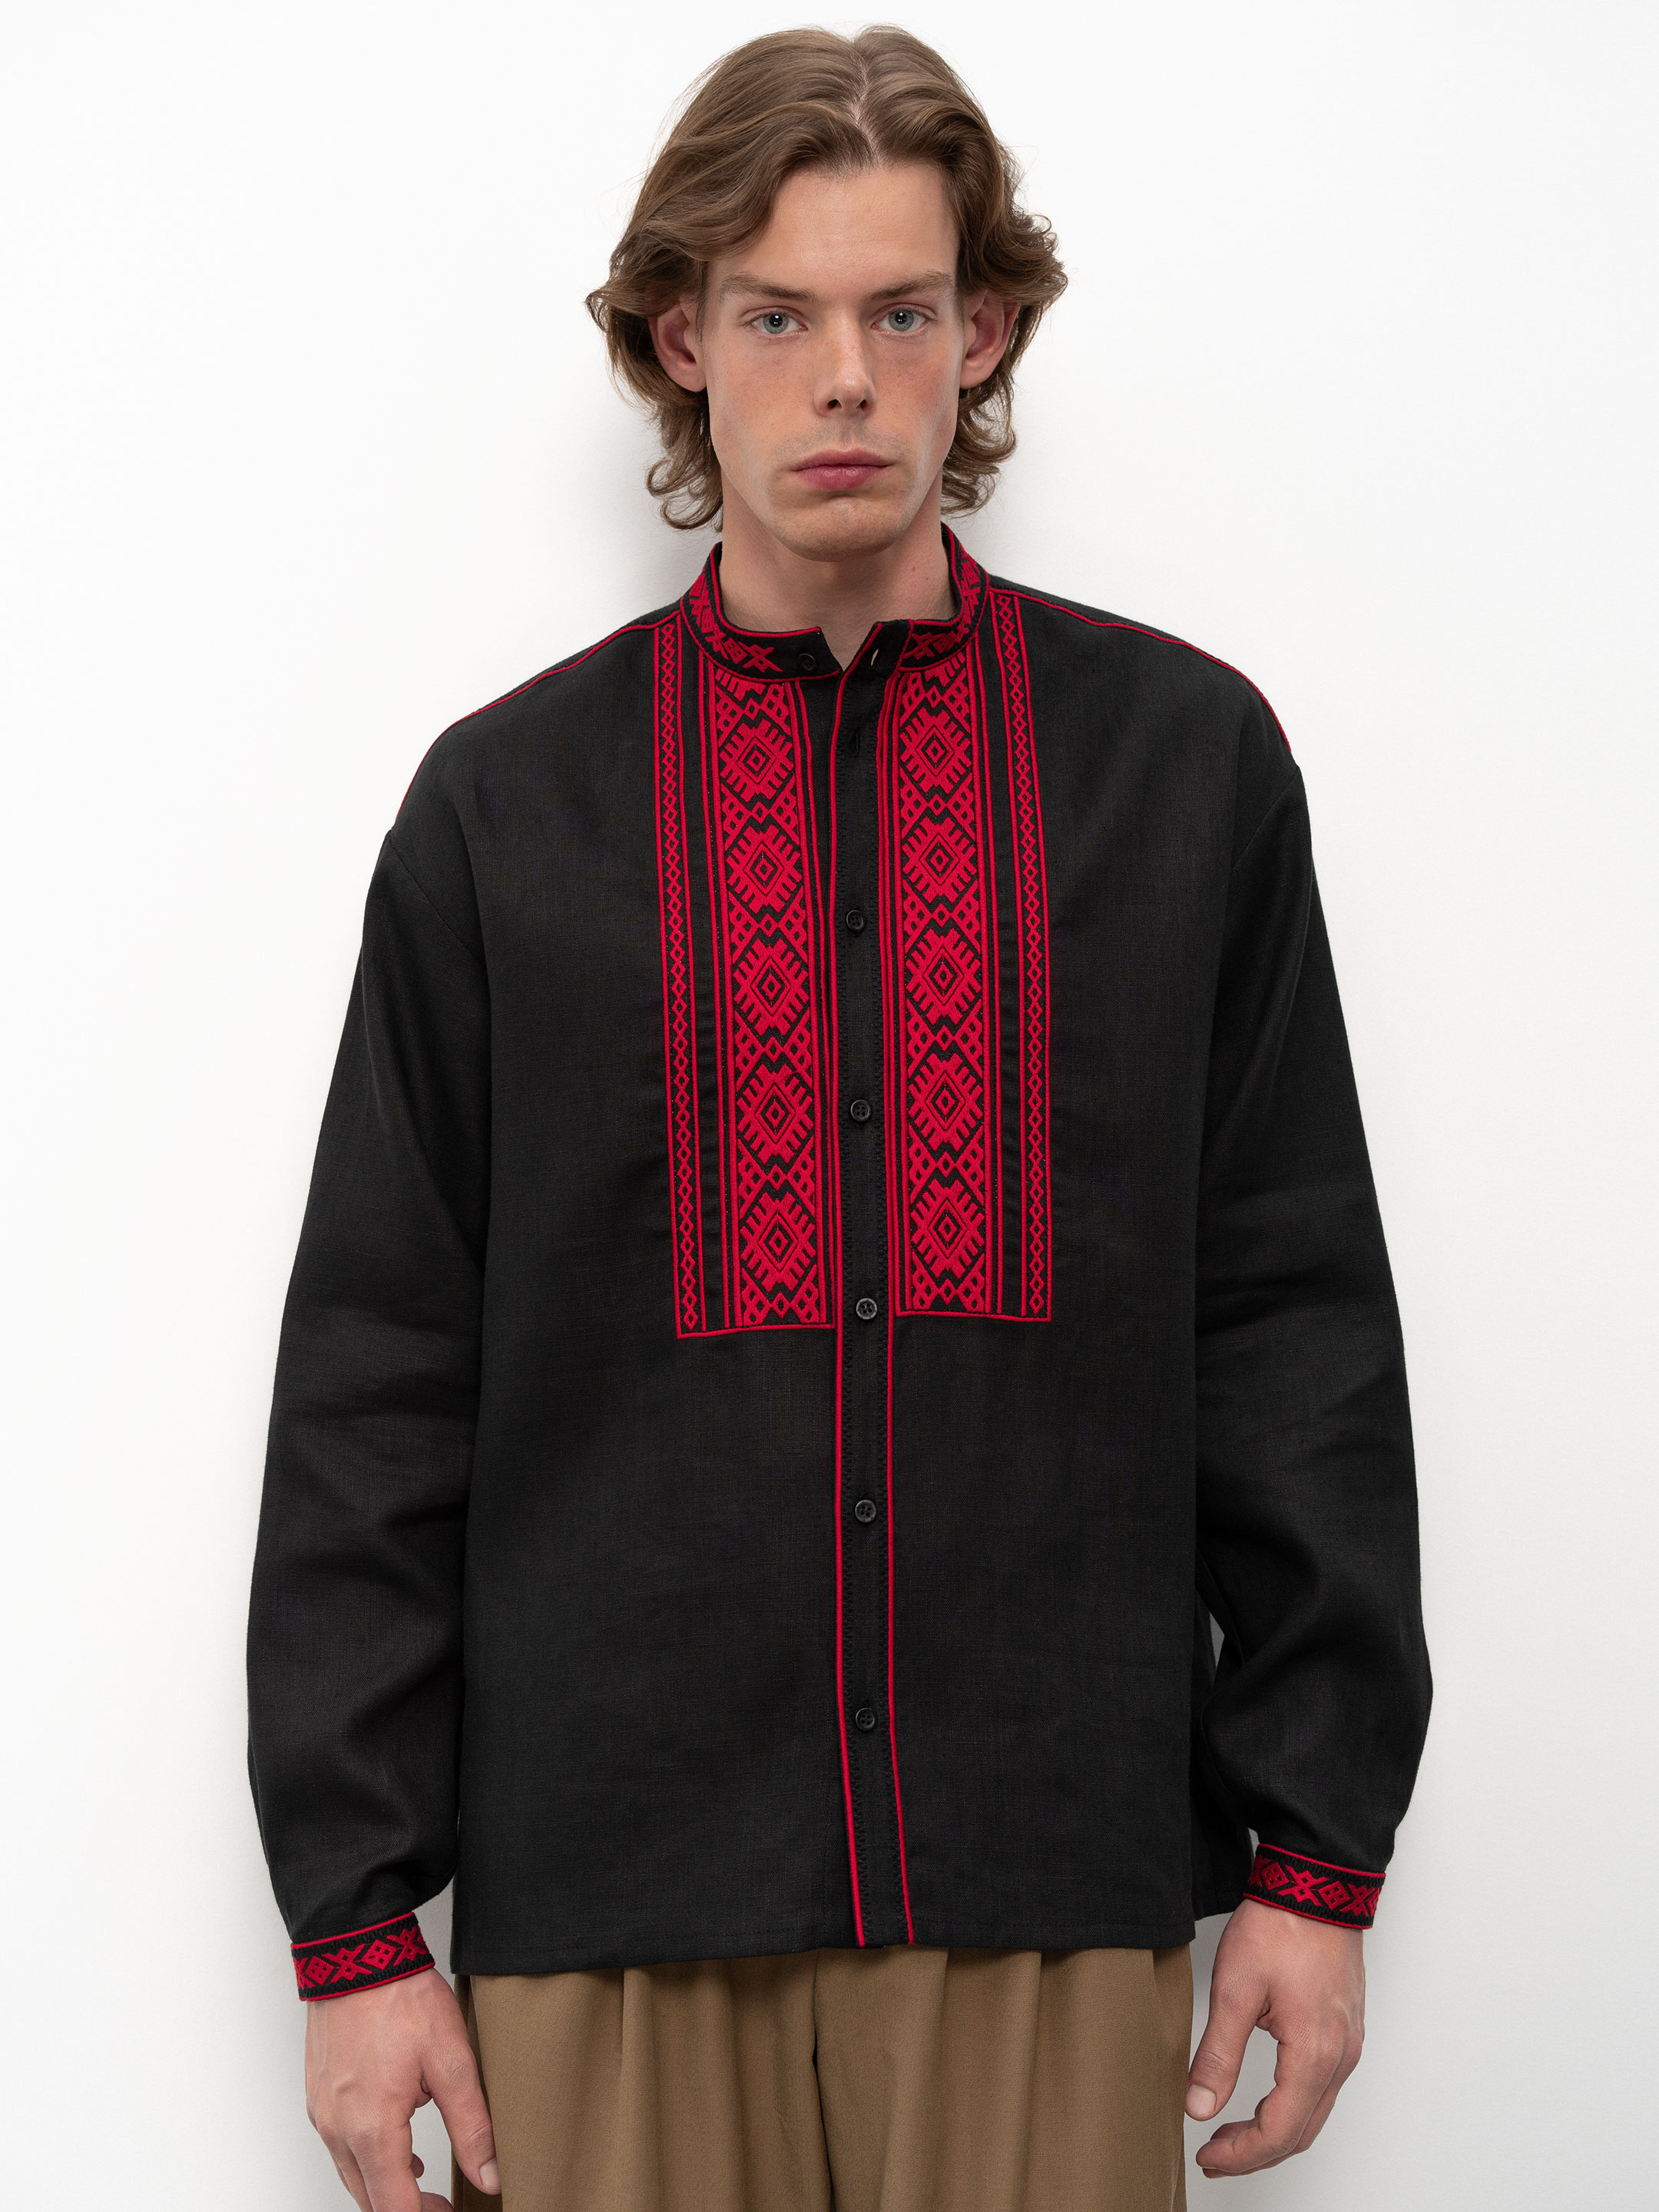 Men's embroidered shirt with a collar Chernihivska